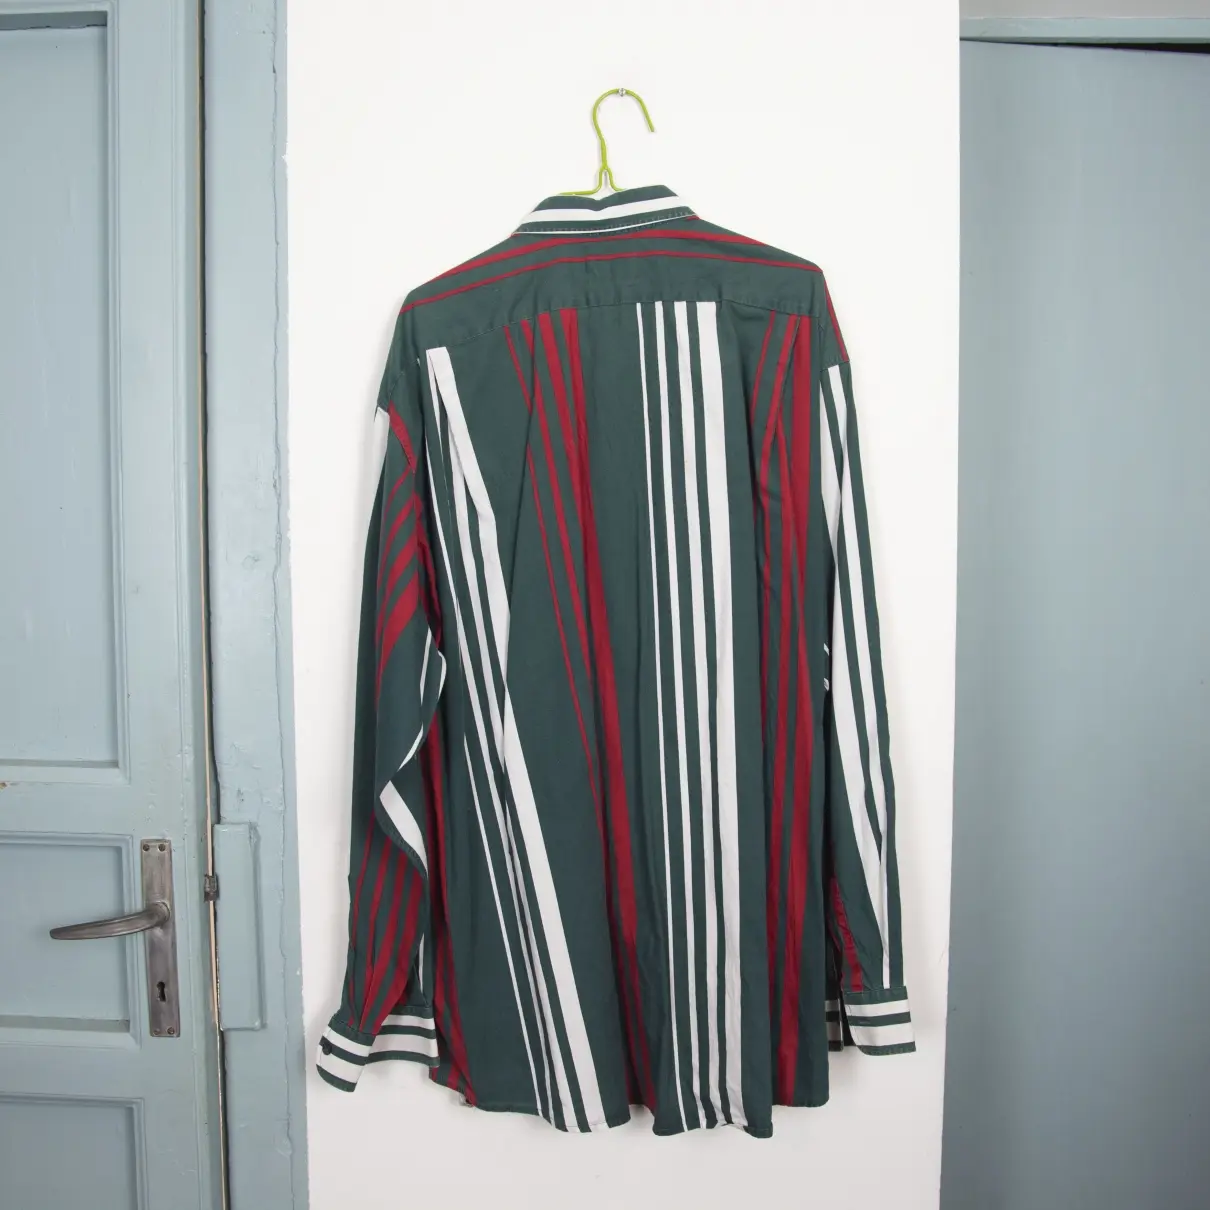 Lacoste Shirt for sale - Vintage